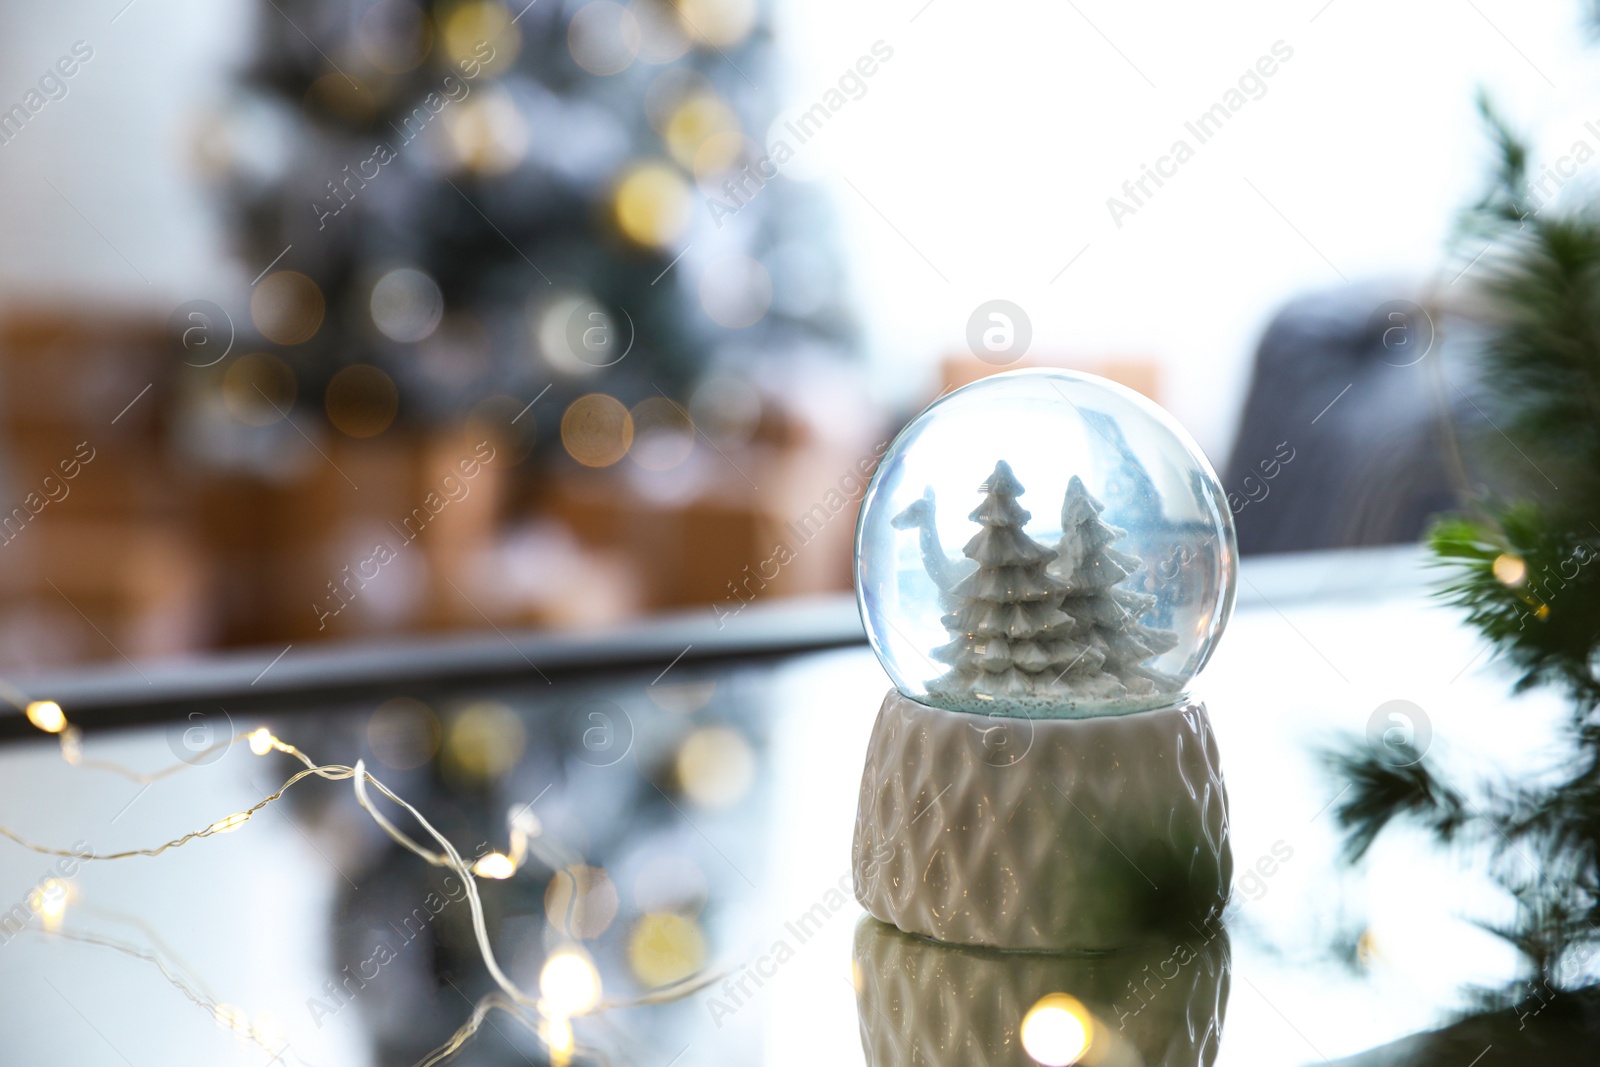 Photo of Decorative Christmas snow globe on mirror surface indoors